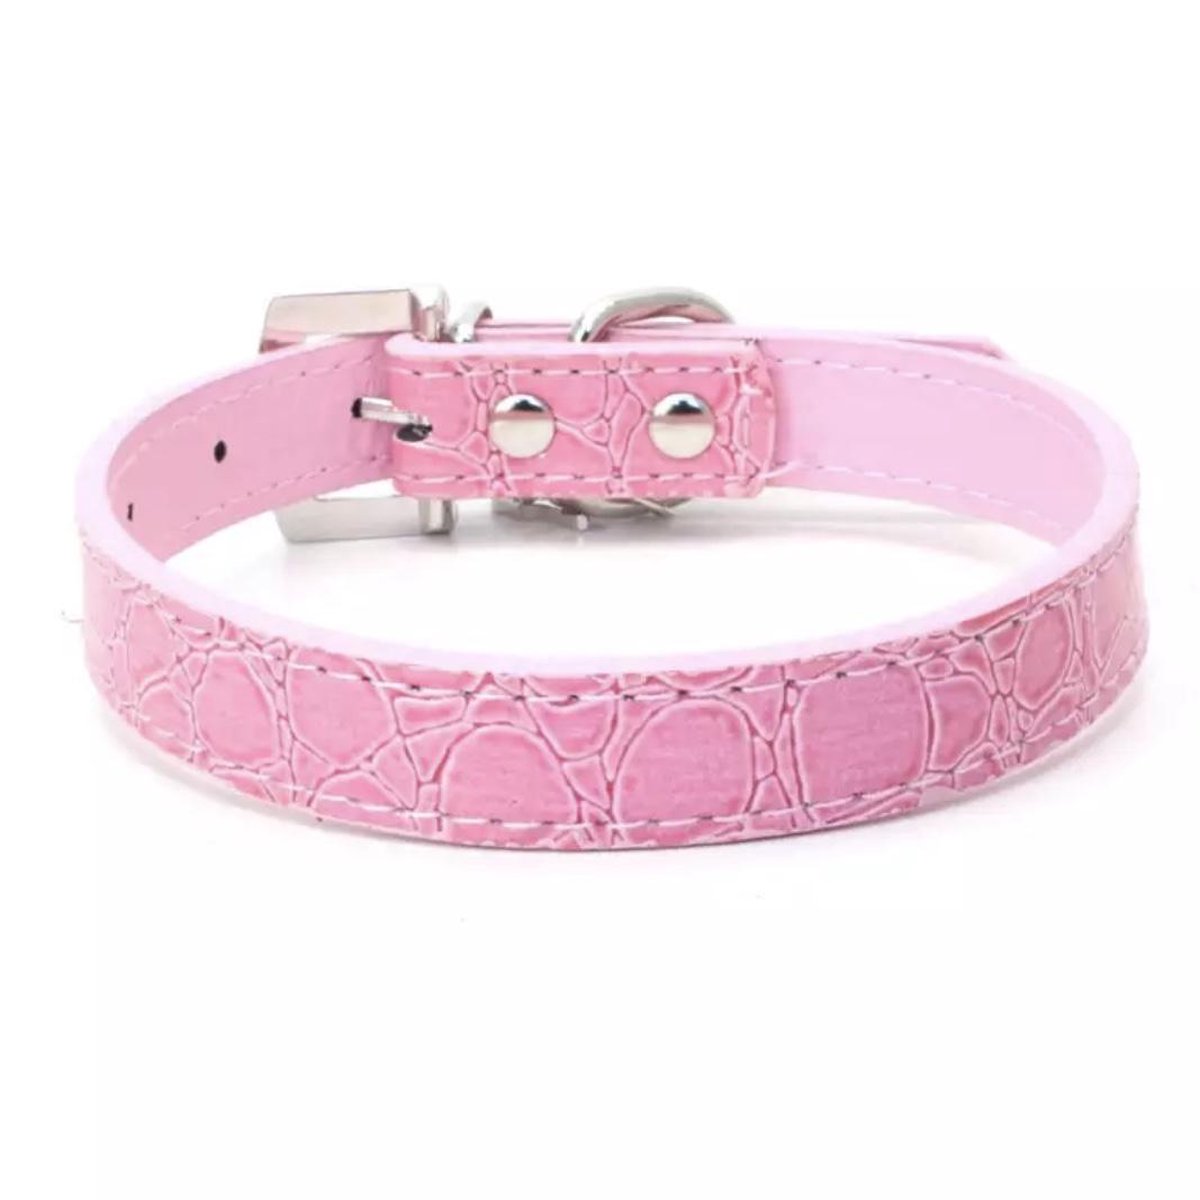 Honden halsbanden - Duo Pack - 2 stuks - Roze - XS - Kleine Honden - Glitter  - Glamour... | bol.com